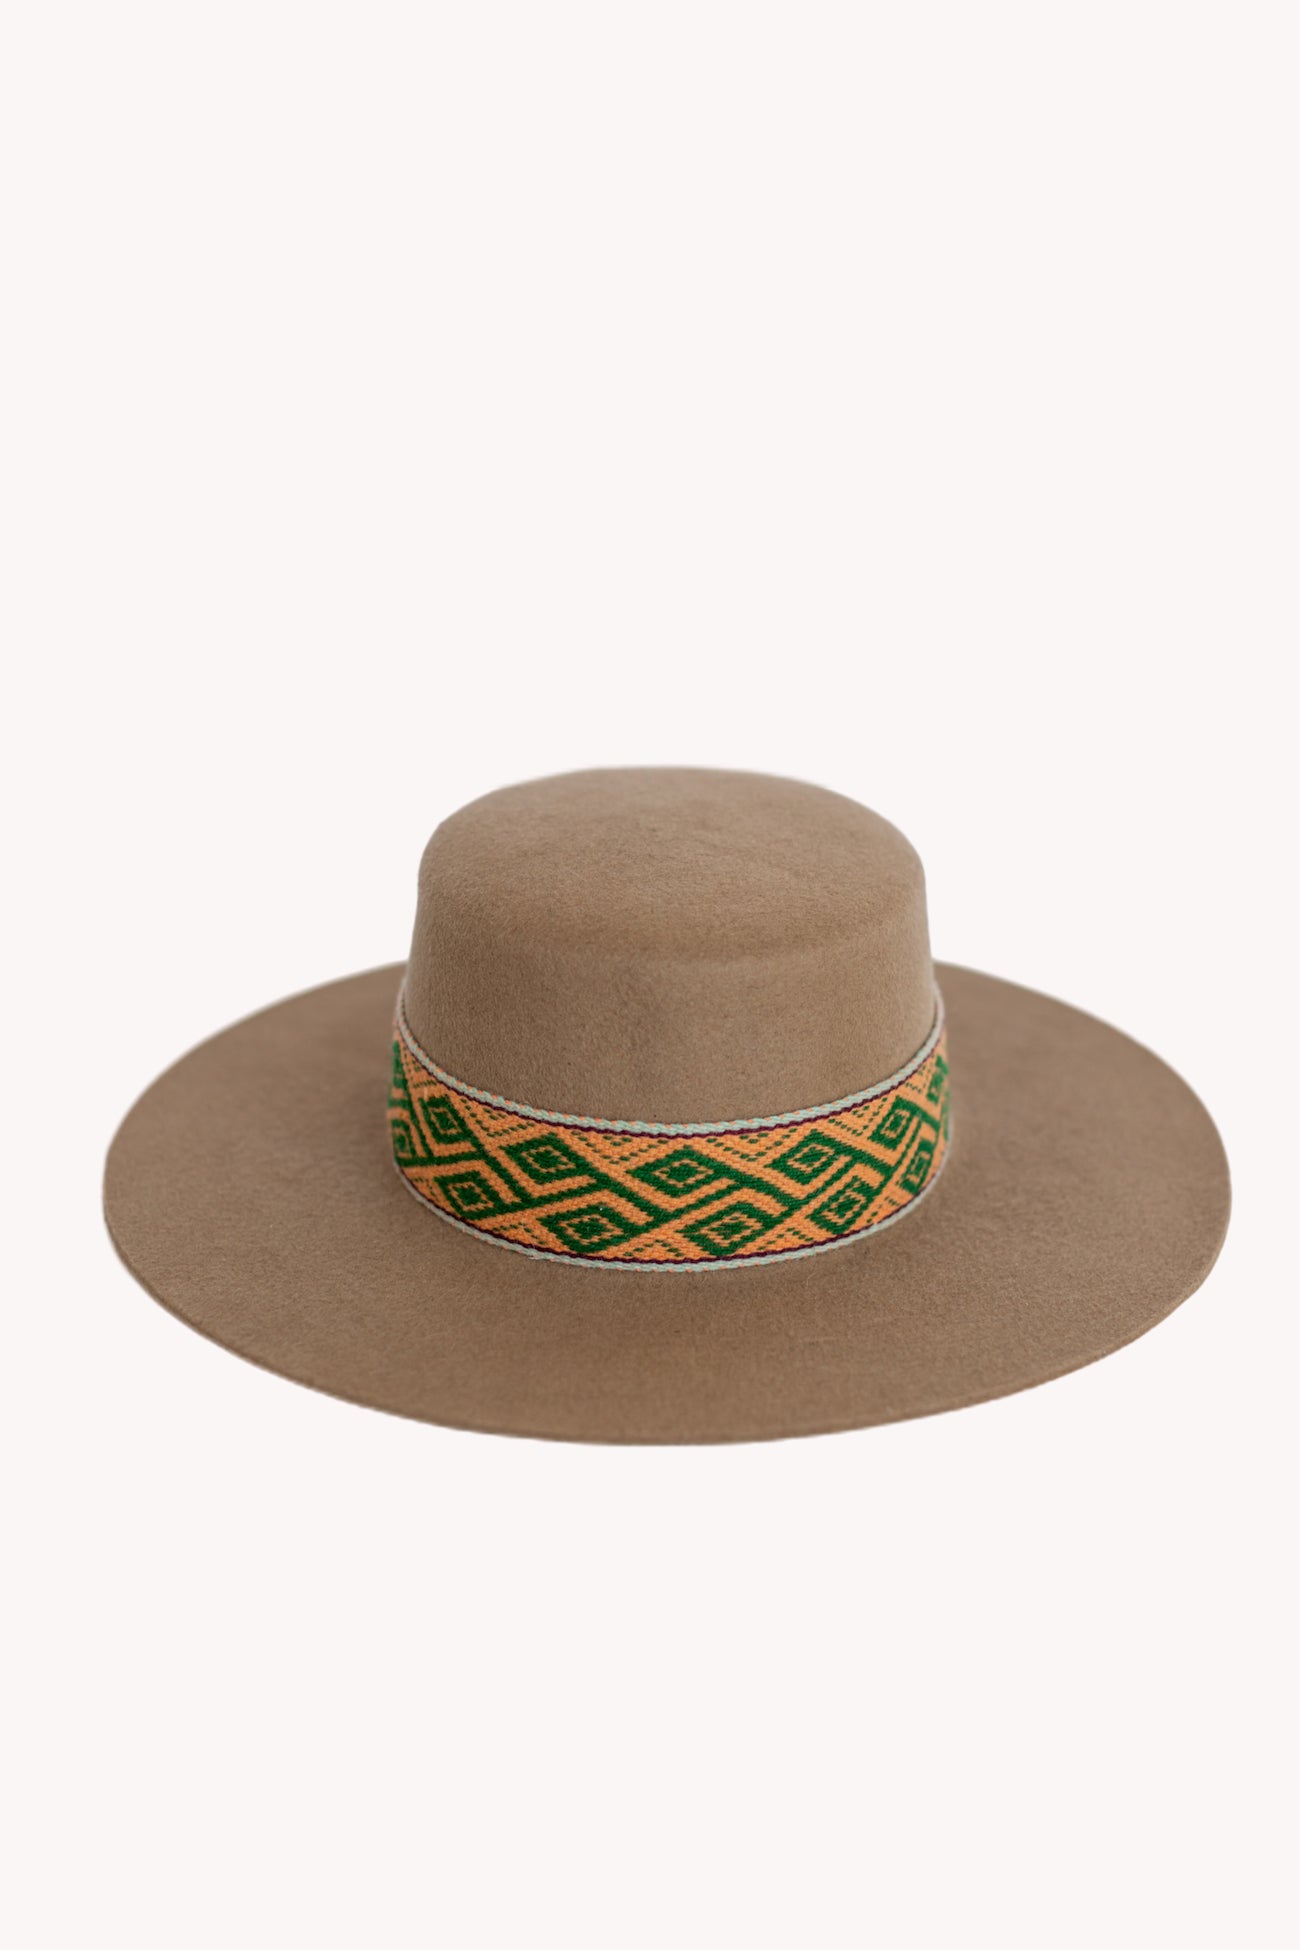 Beige Spanish style alpaca wool peruvian hat